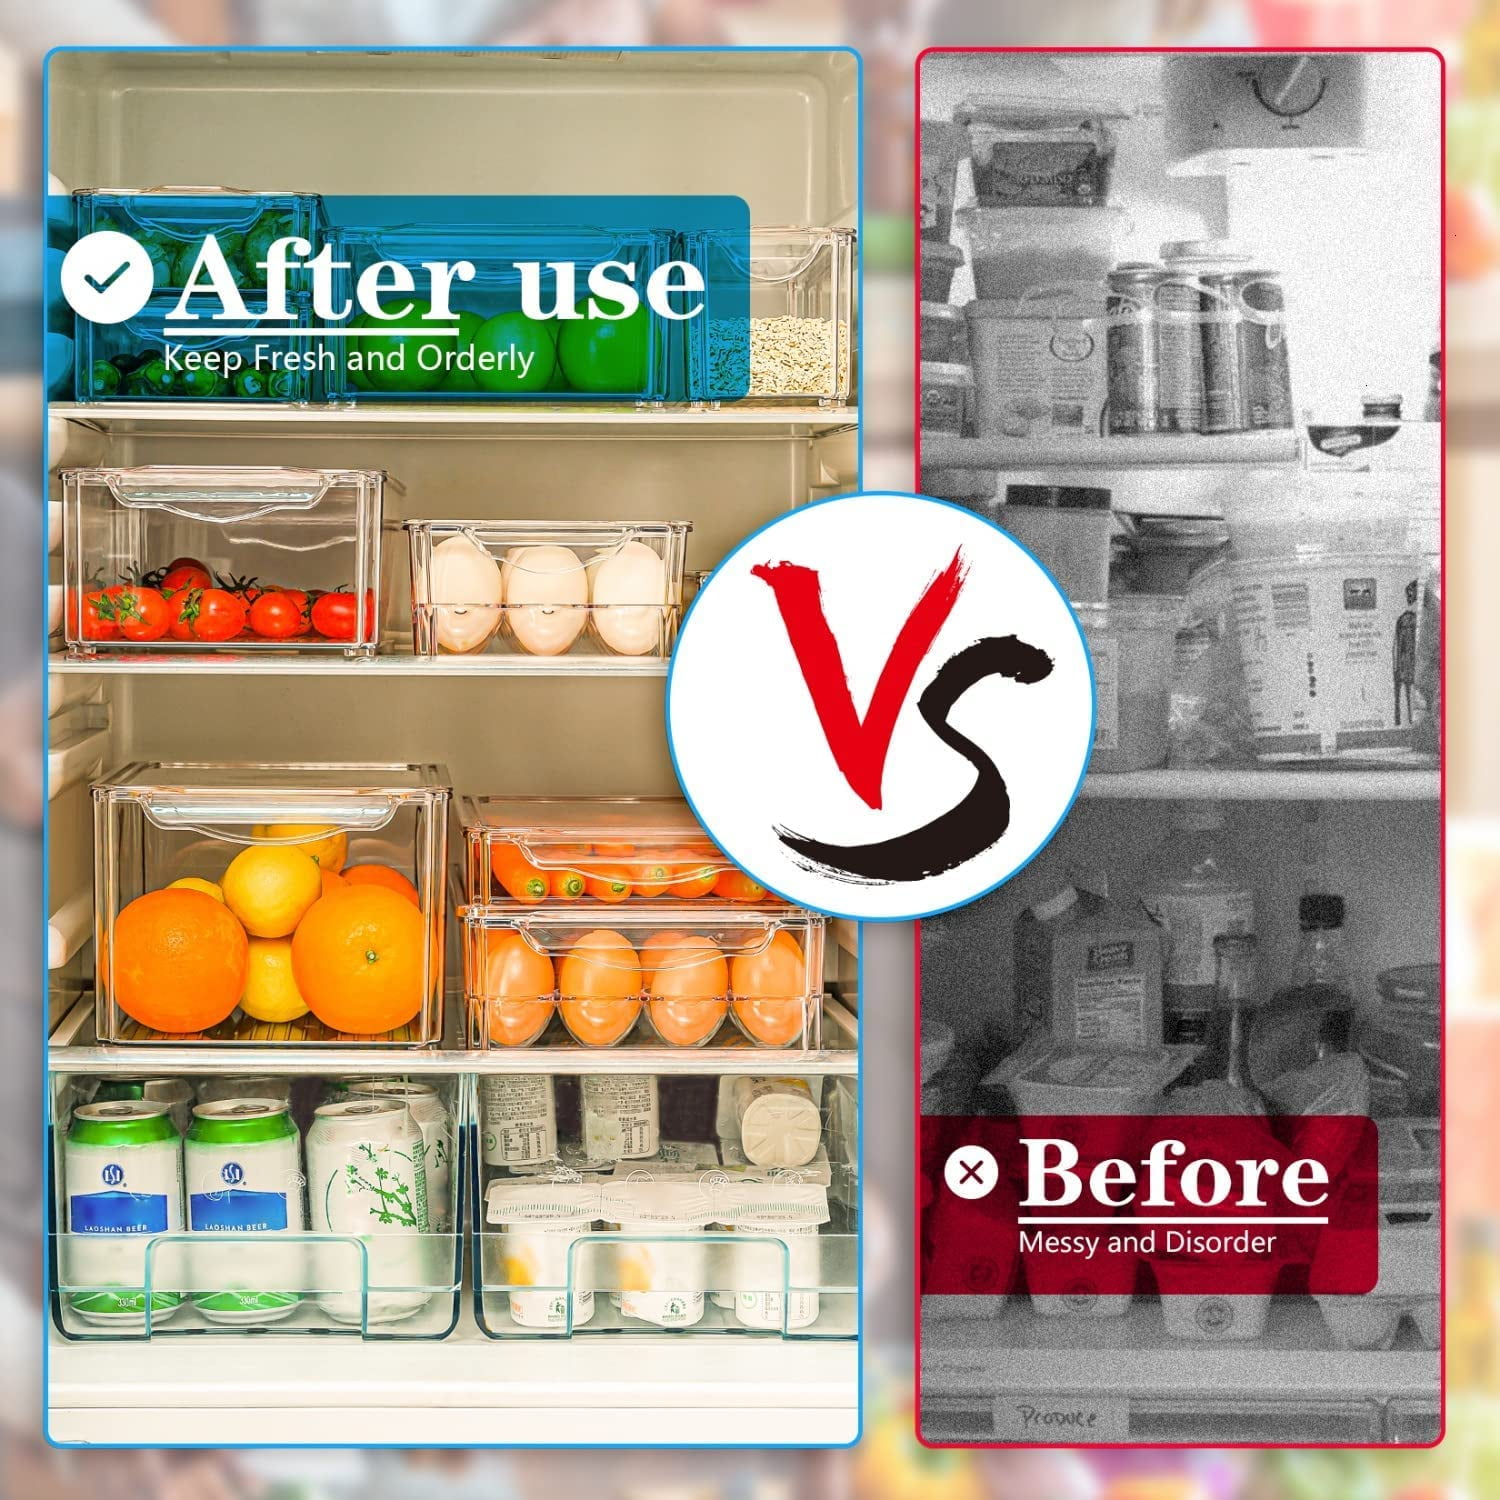 Kingrol 8 Pack Plastic Storage Bins for Freezer, Pantry, Countertop,  Cabinet Organization, Stackable Food Storage Organizer with Handles, BPA  Free, 10